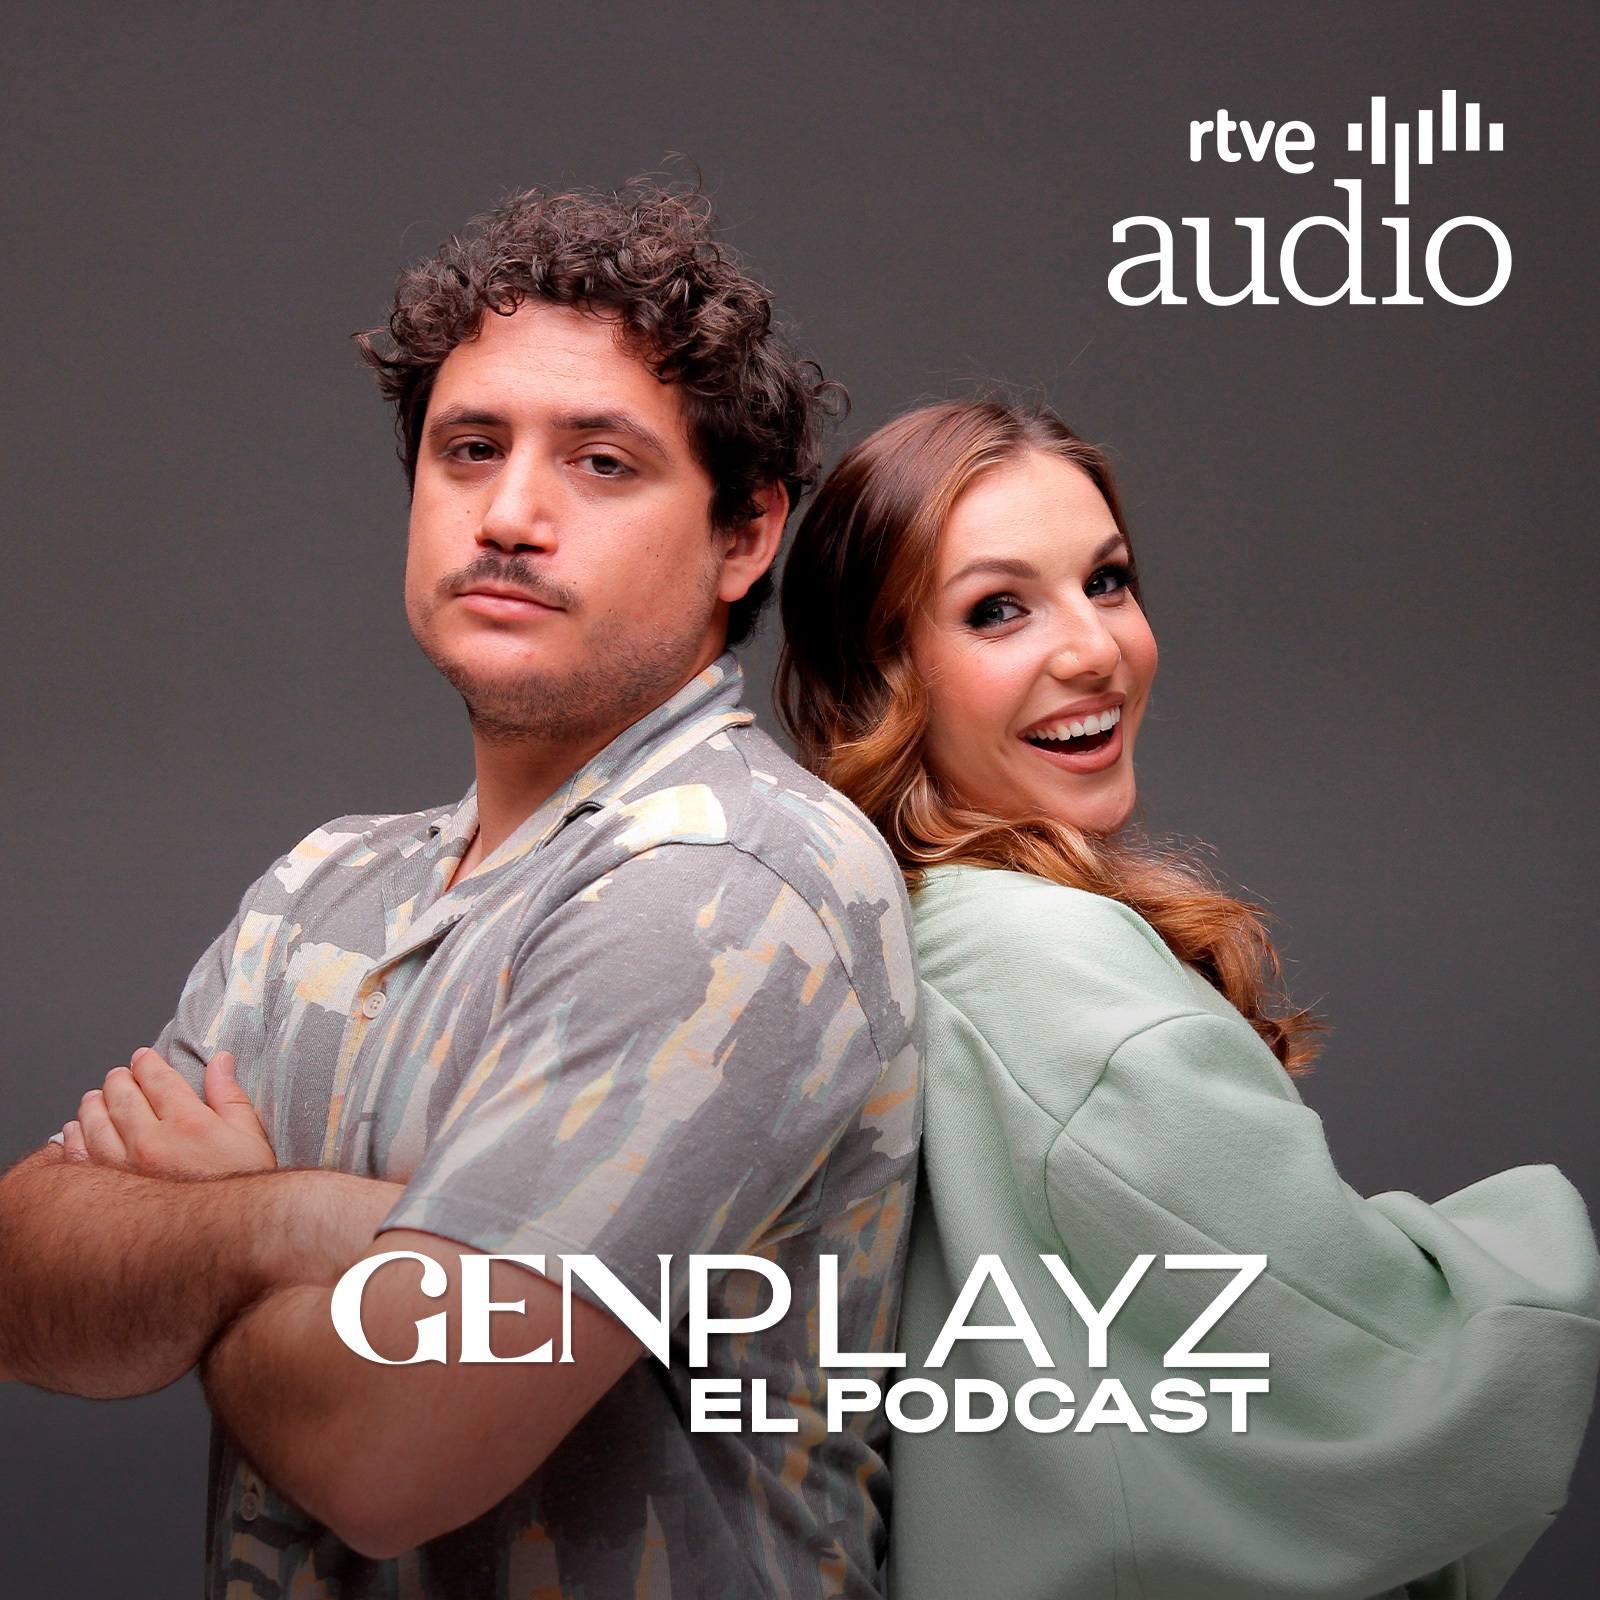 Gen Playz. El podcast